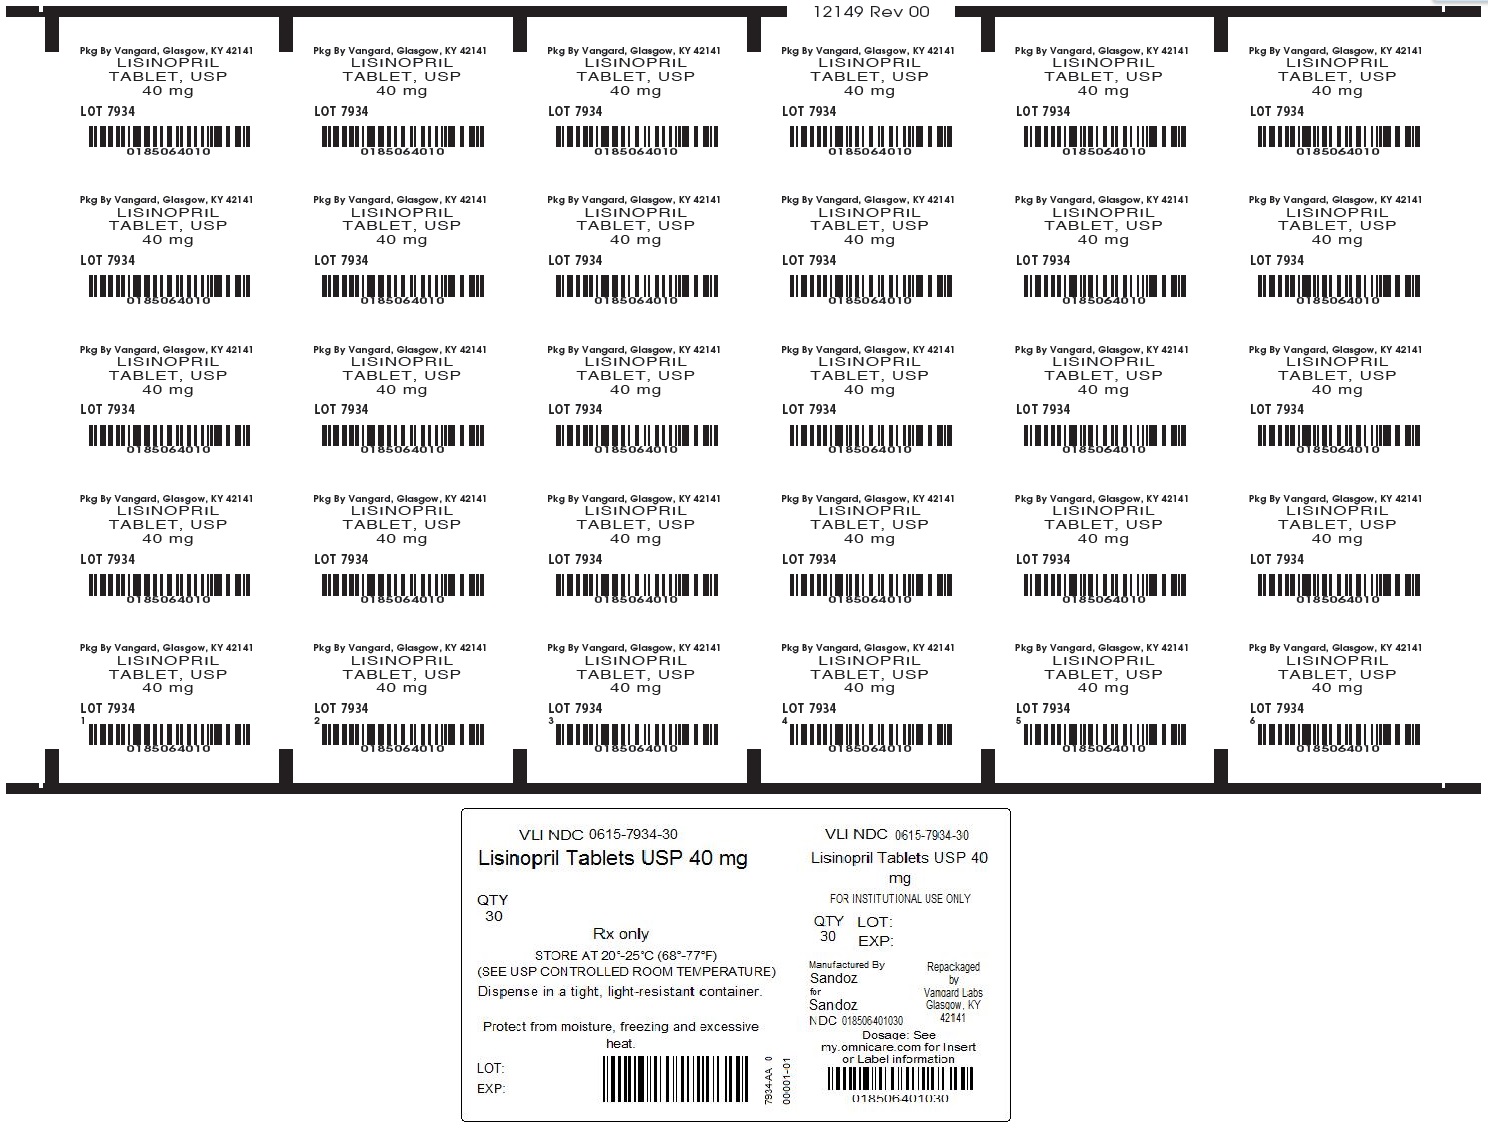 Lisinopril Tablets, USP 40mg Unit dose Label